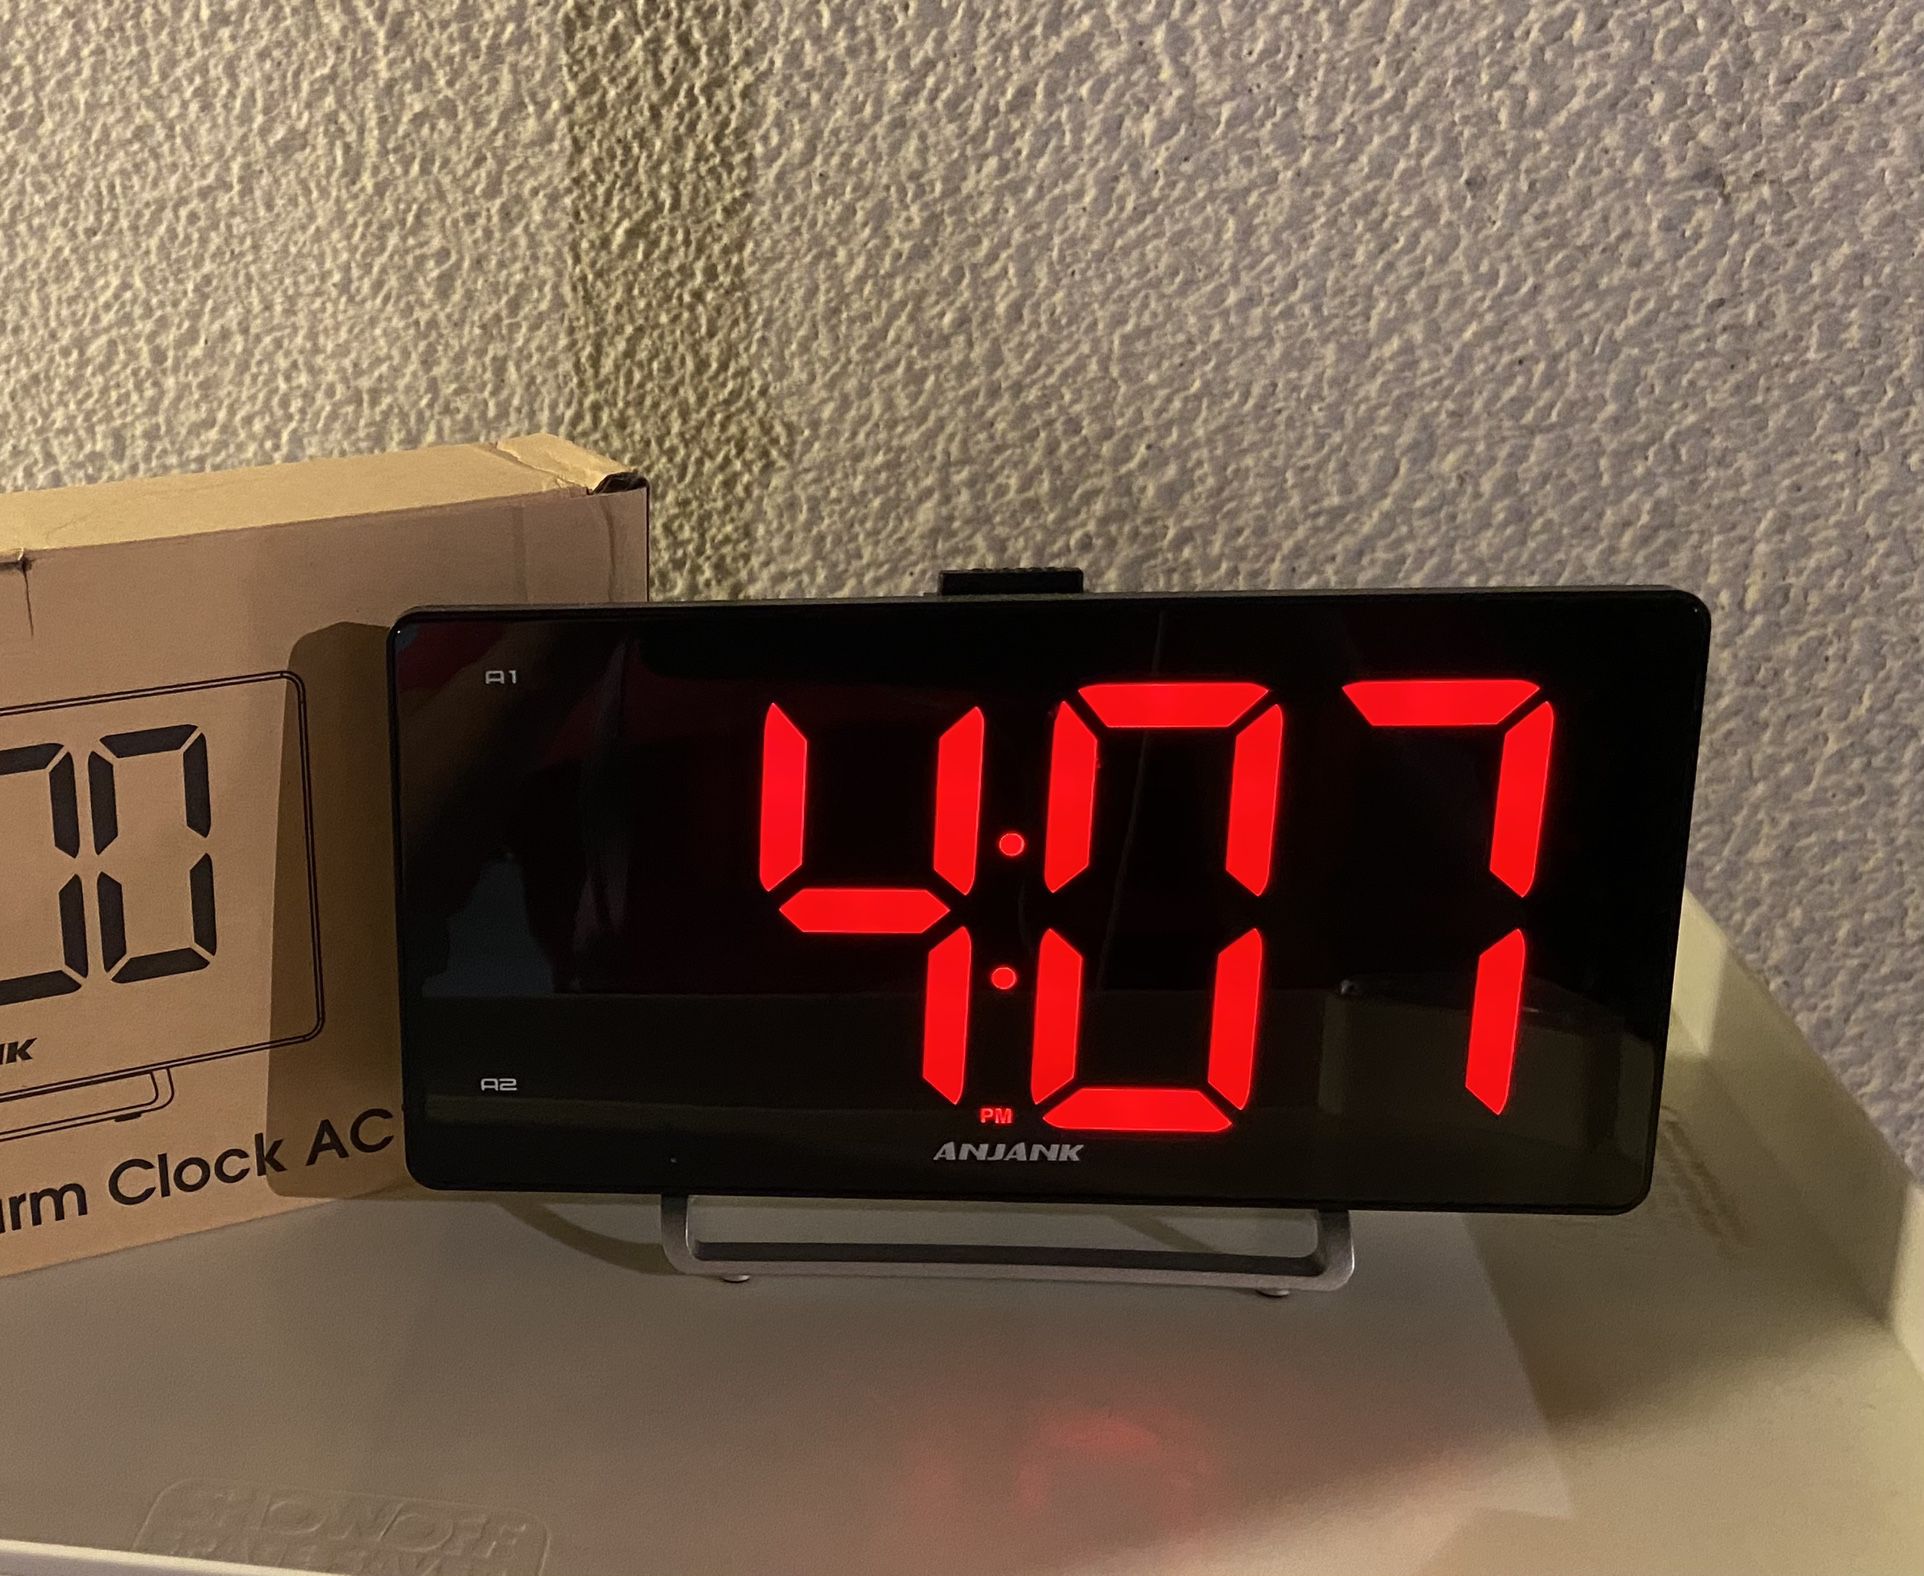 Large Display Alarm Clock